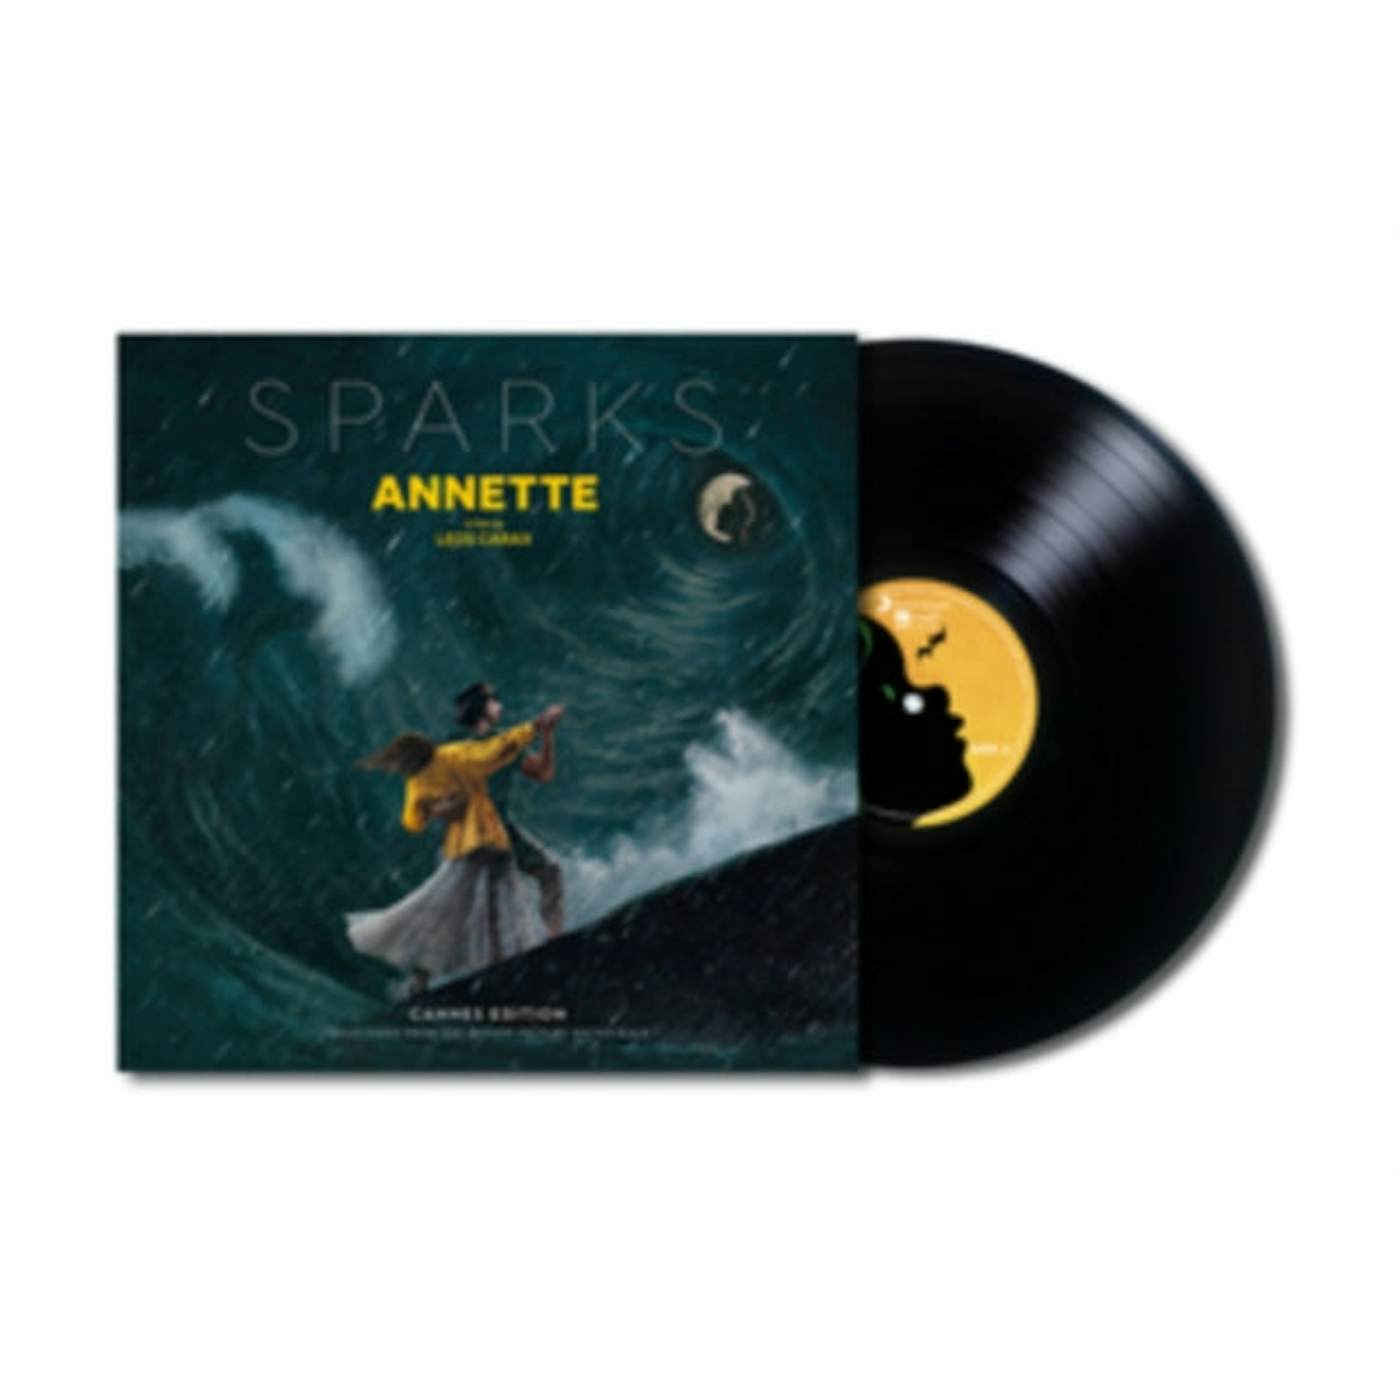 Sparks LP Vinyl Record - Annette - Original Soundtrack